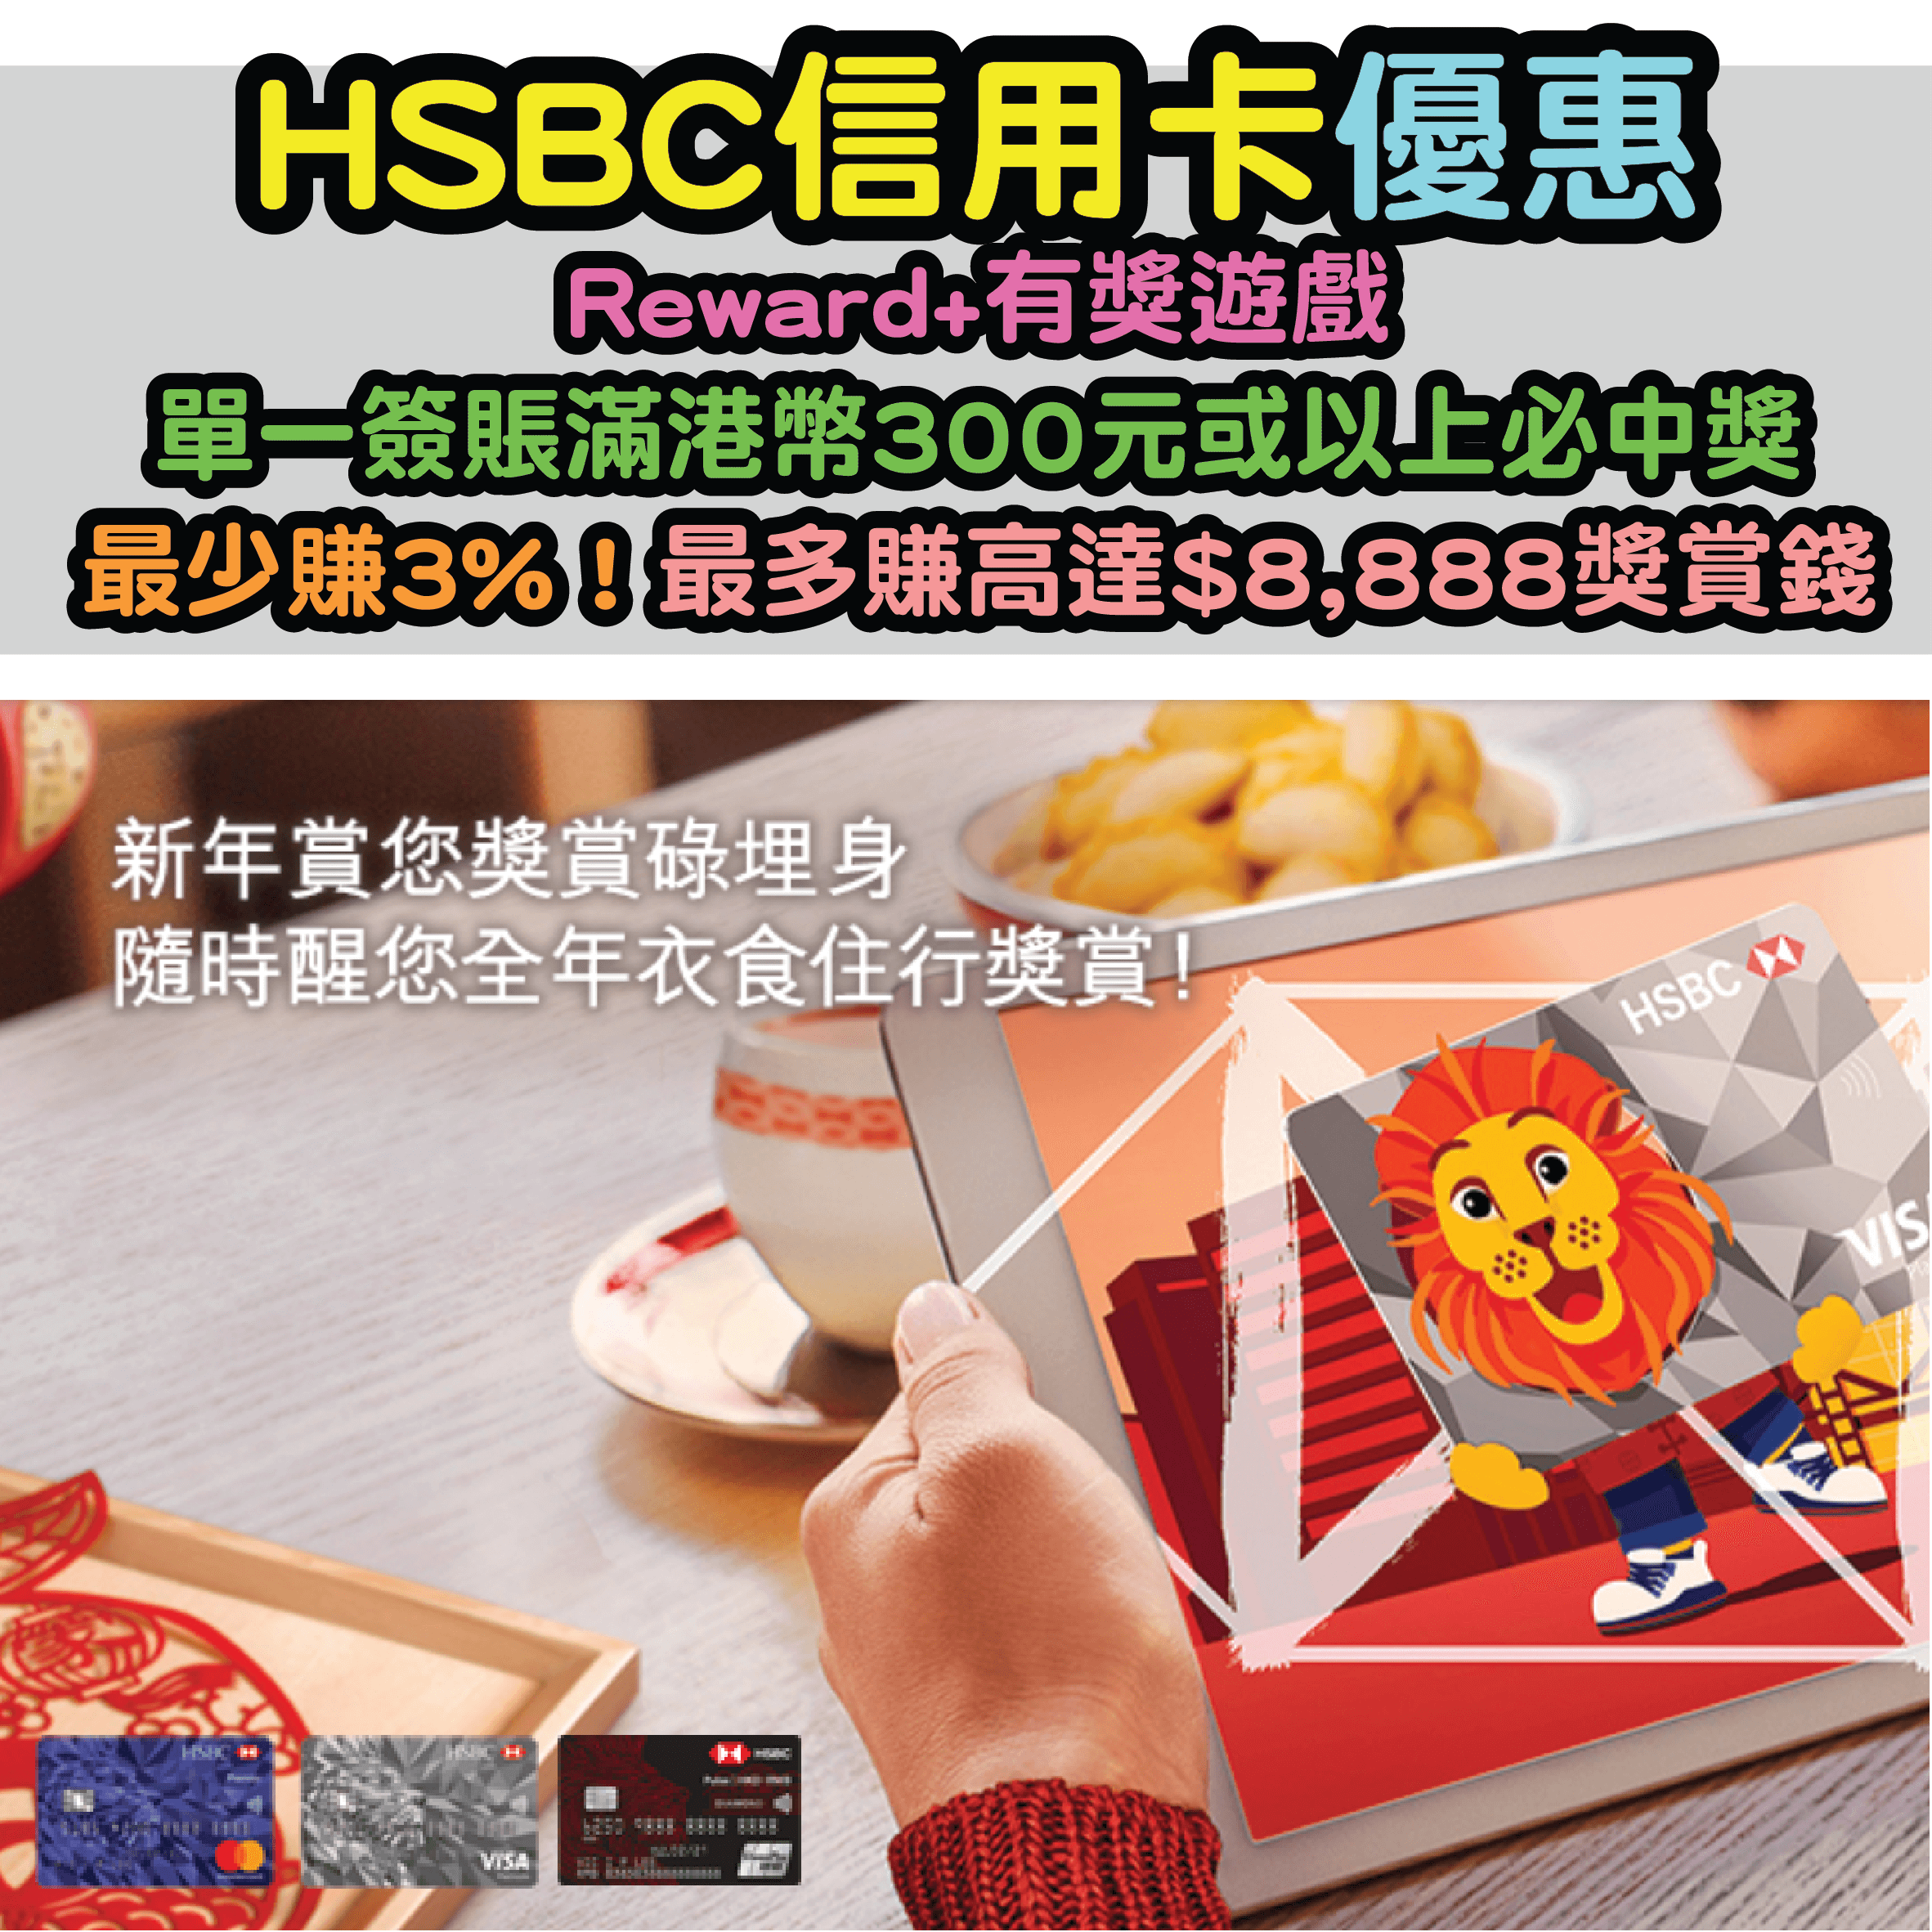 HSBC Reward+有獎遊戲！每次單一簽賬滿港幣300元或以上即可參加必中獎小遊戲，可賺取高達$8,888「獎賞錢」！